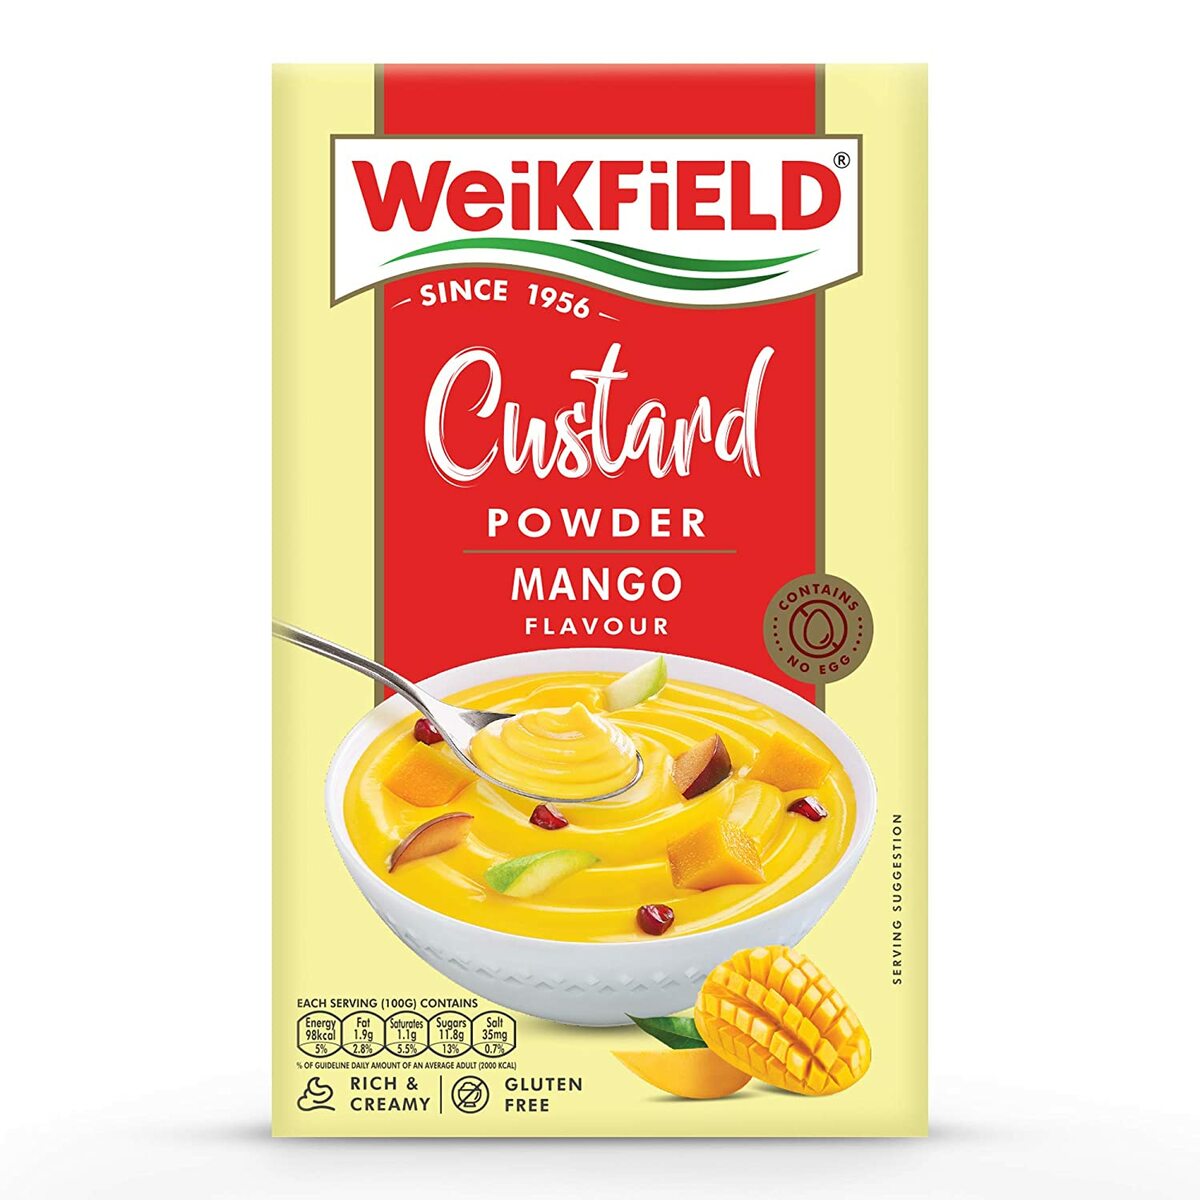 WeikField Custard Powder Mango 75g Packet